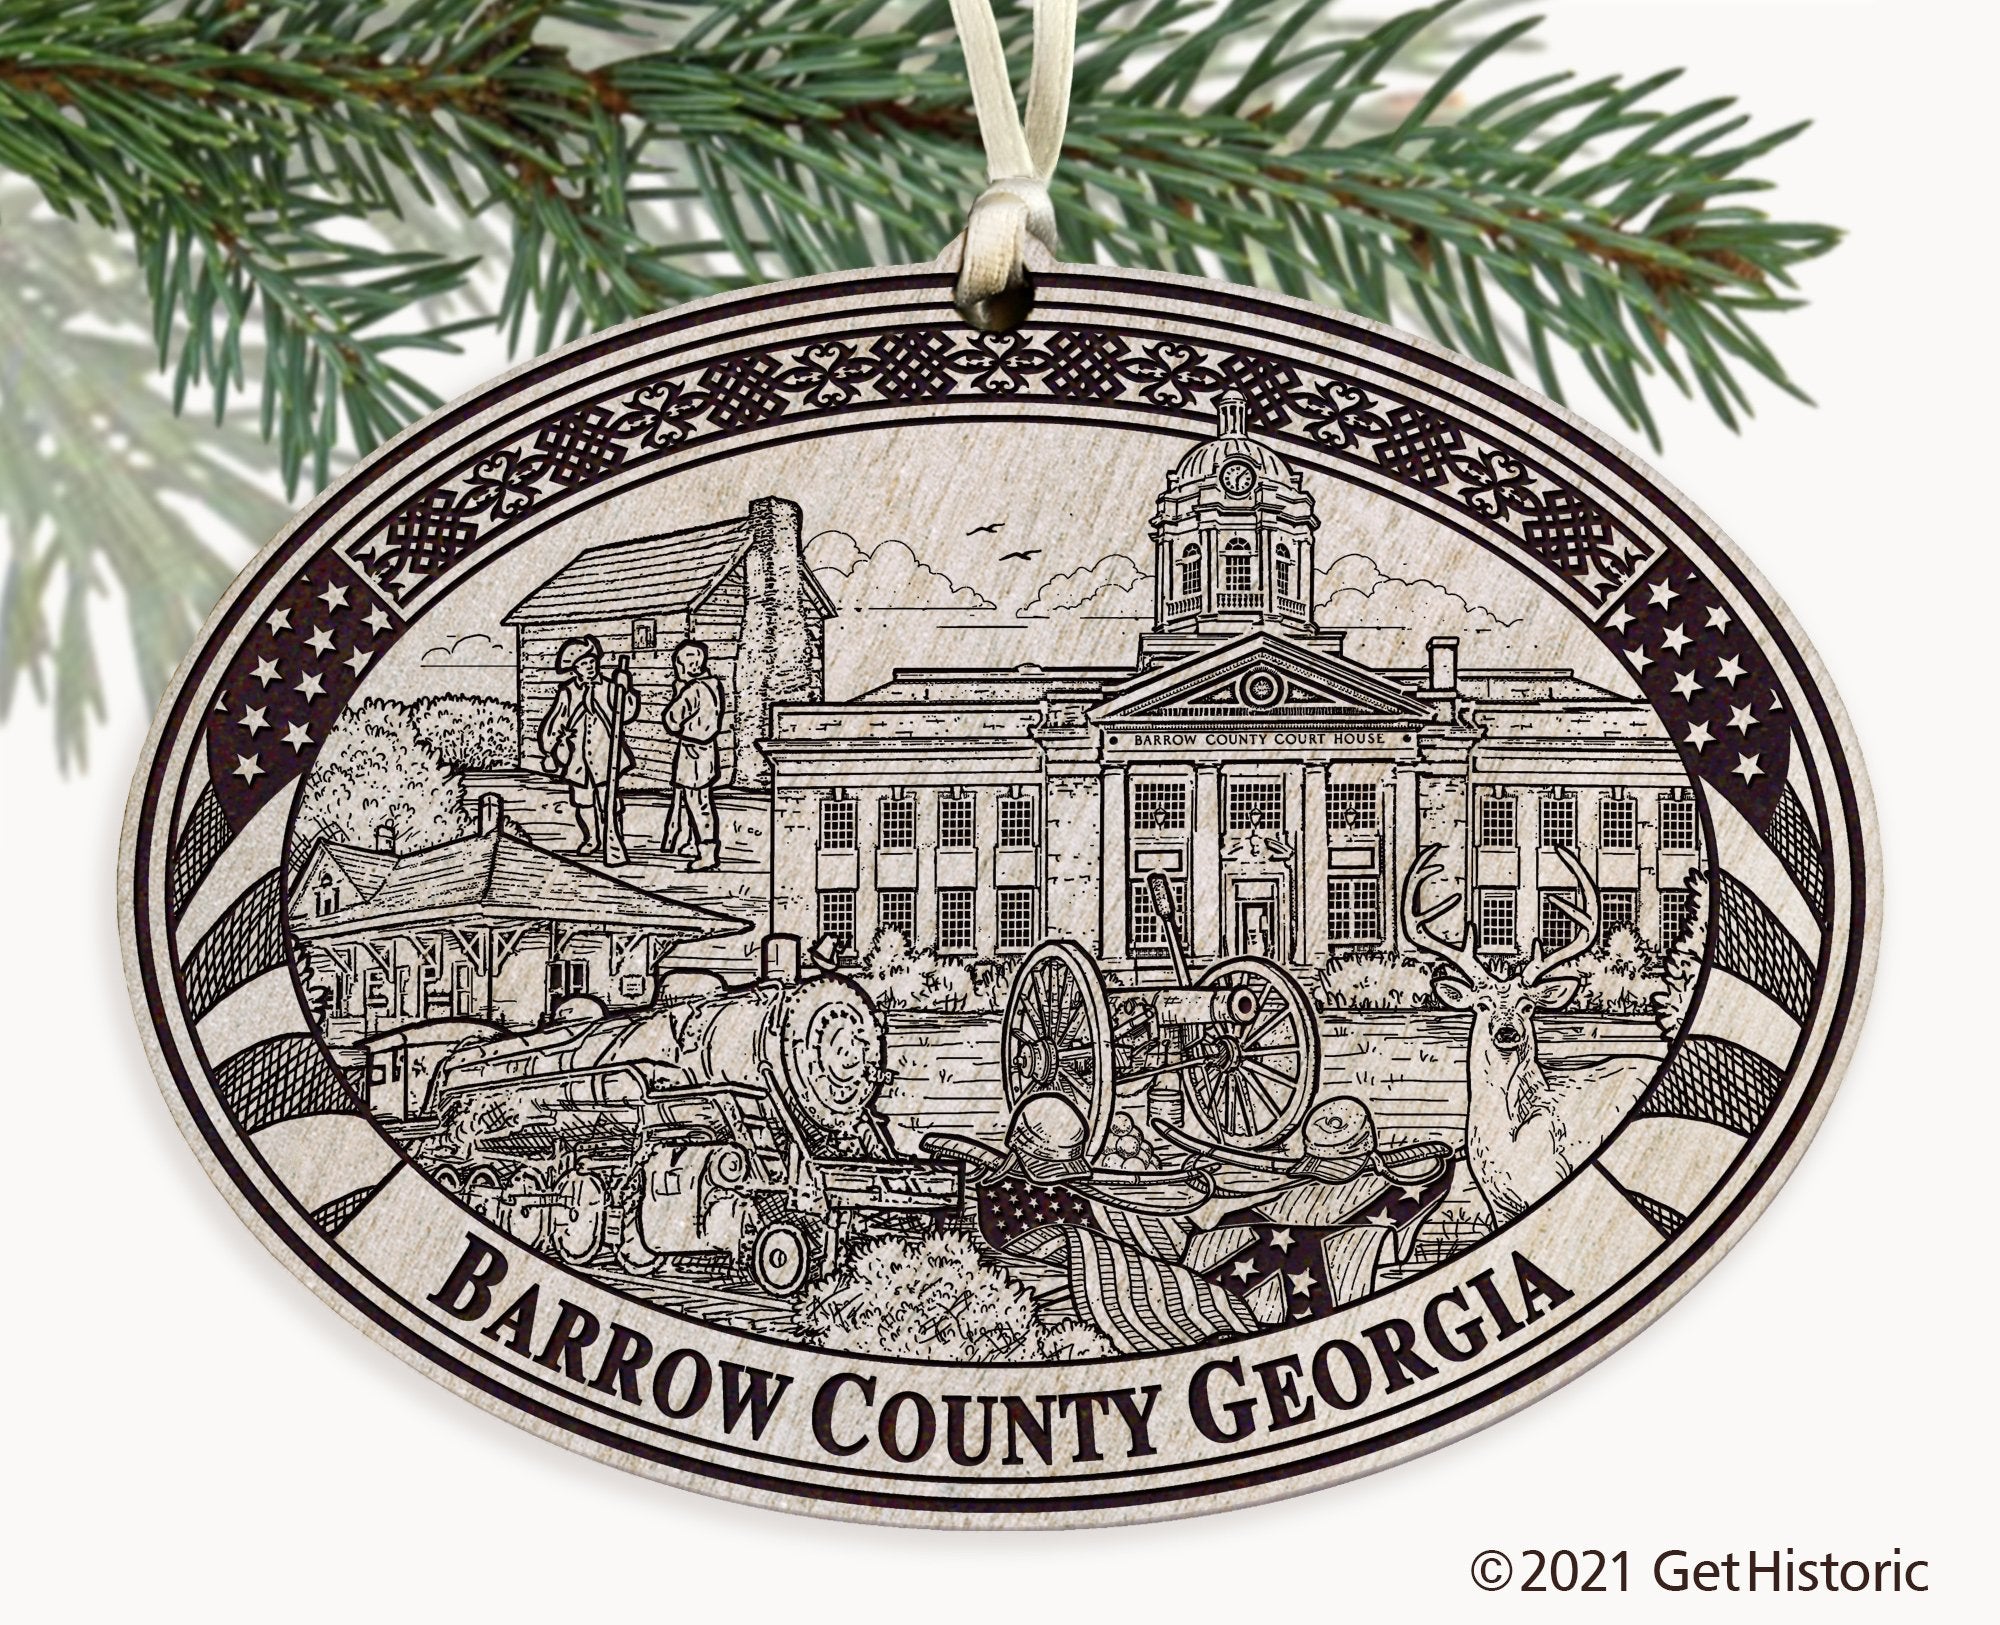 Barrow County Georgia Engraved Ornament